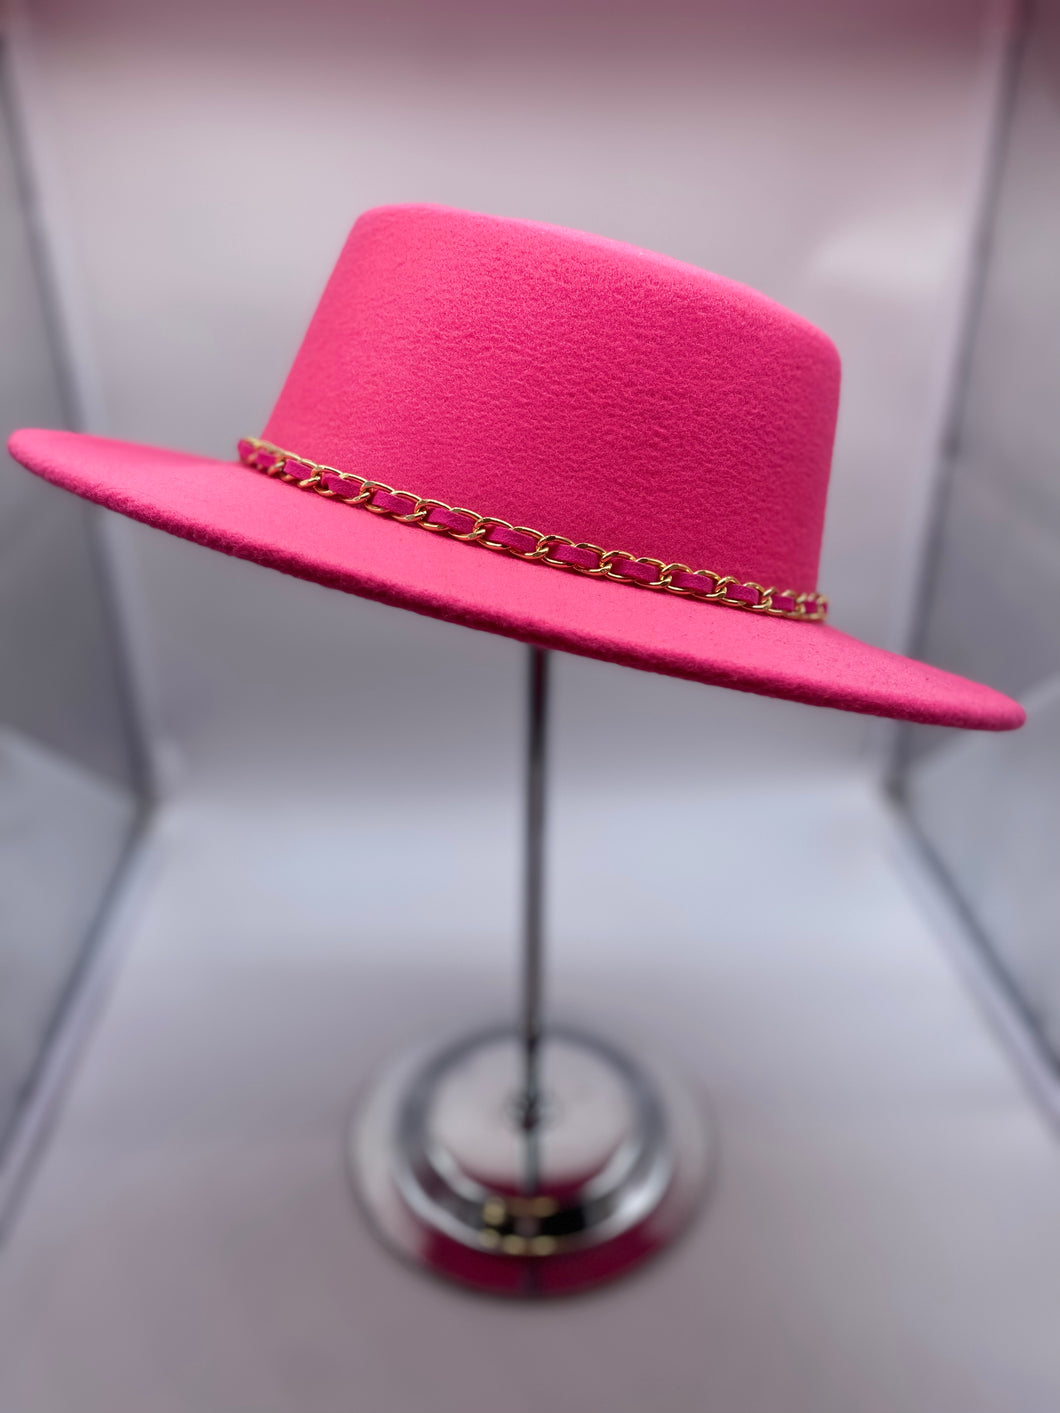 Fashion Hat